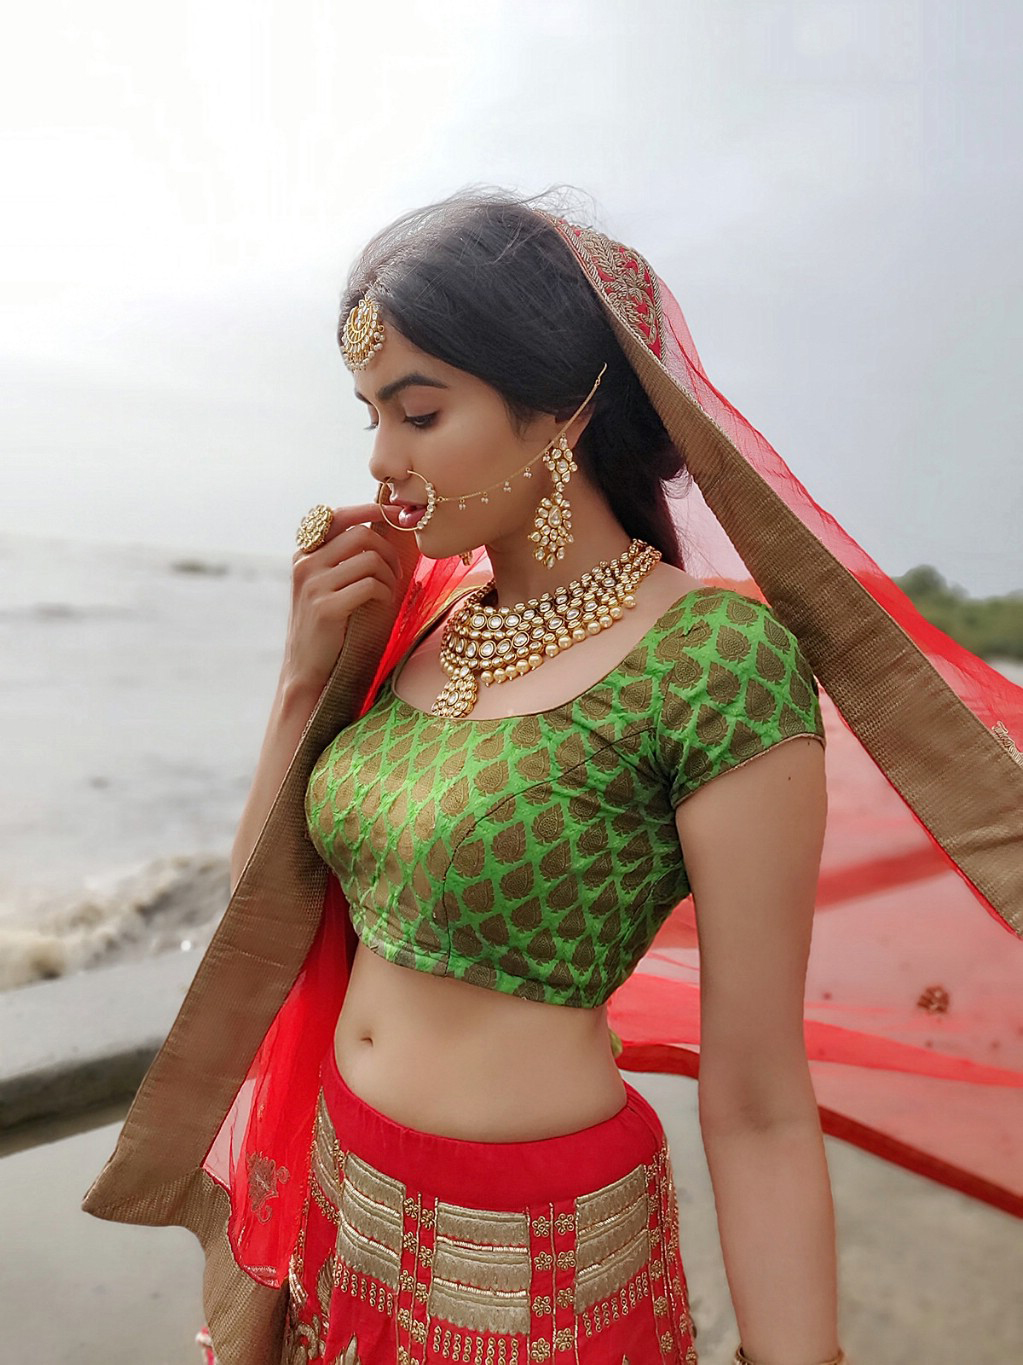 Beauty Galore HD : Adah Sharma Breathtaking Hot HD Photos In Indian Ethnic  Getup